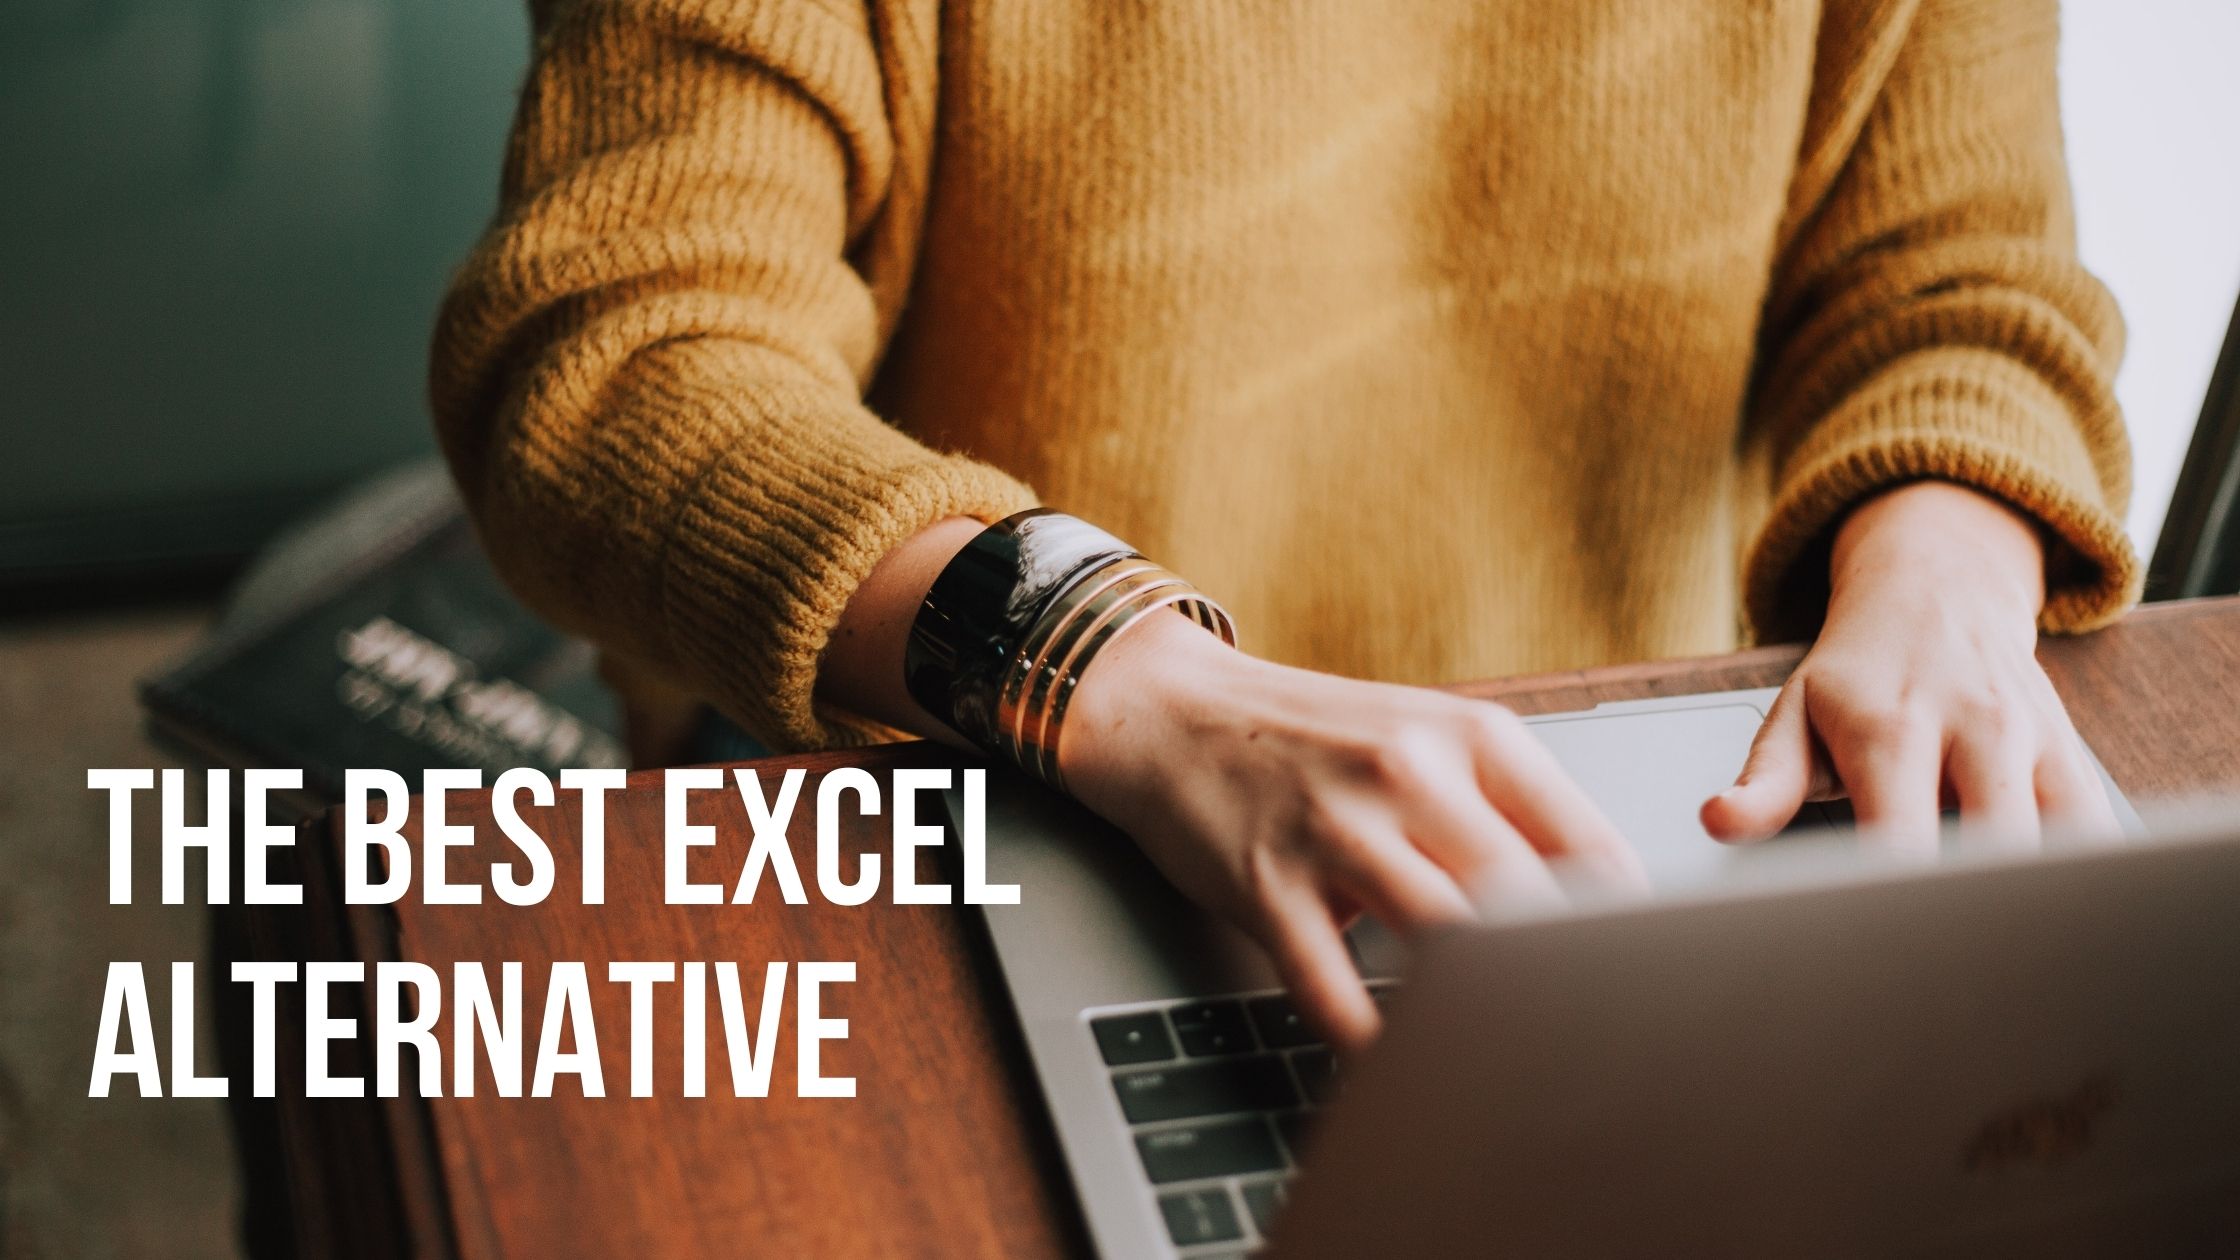 The Best Excel Alternative?